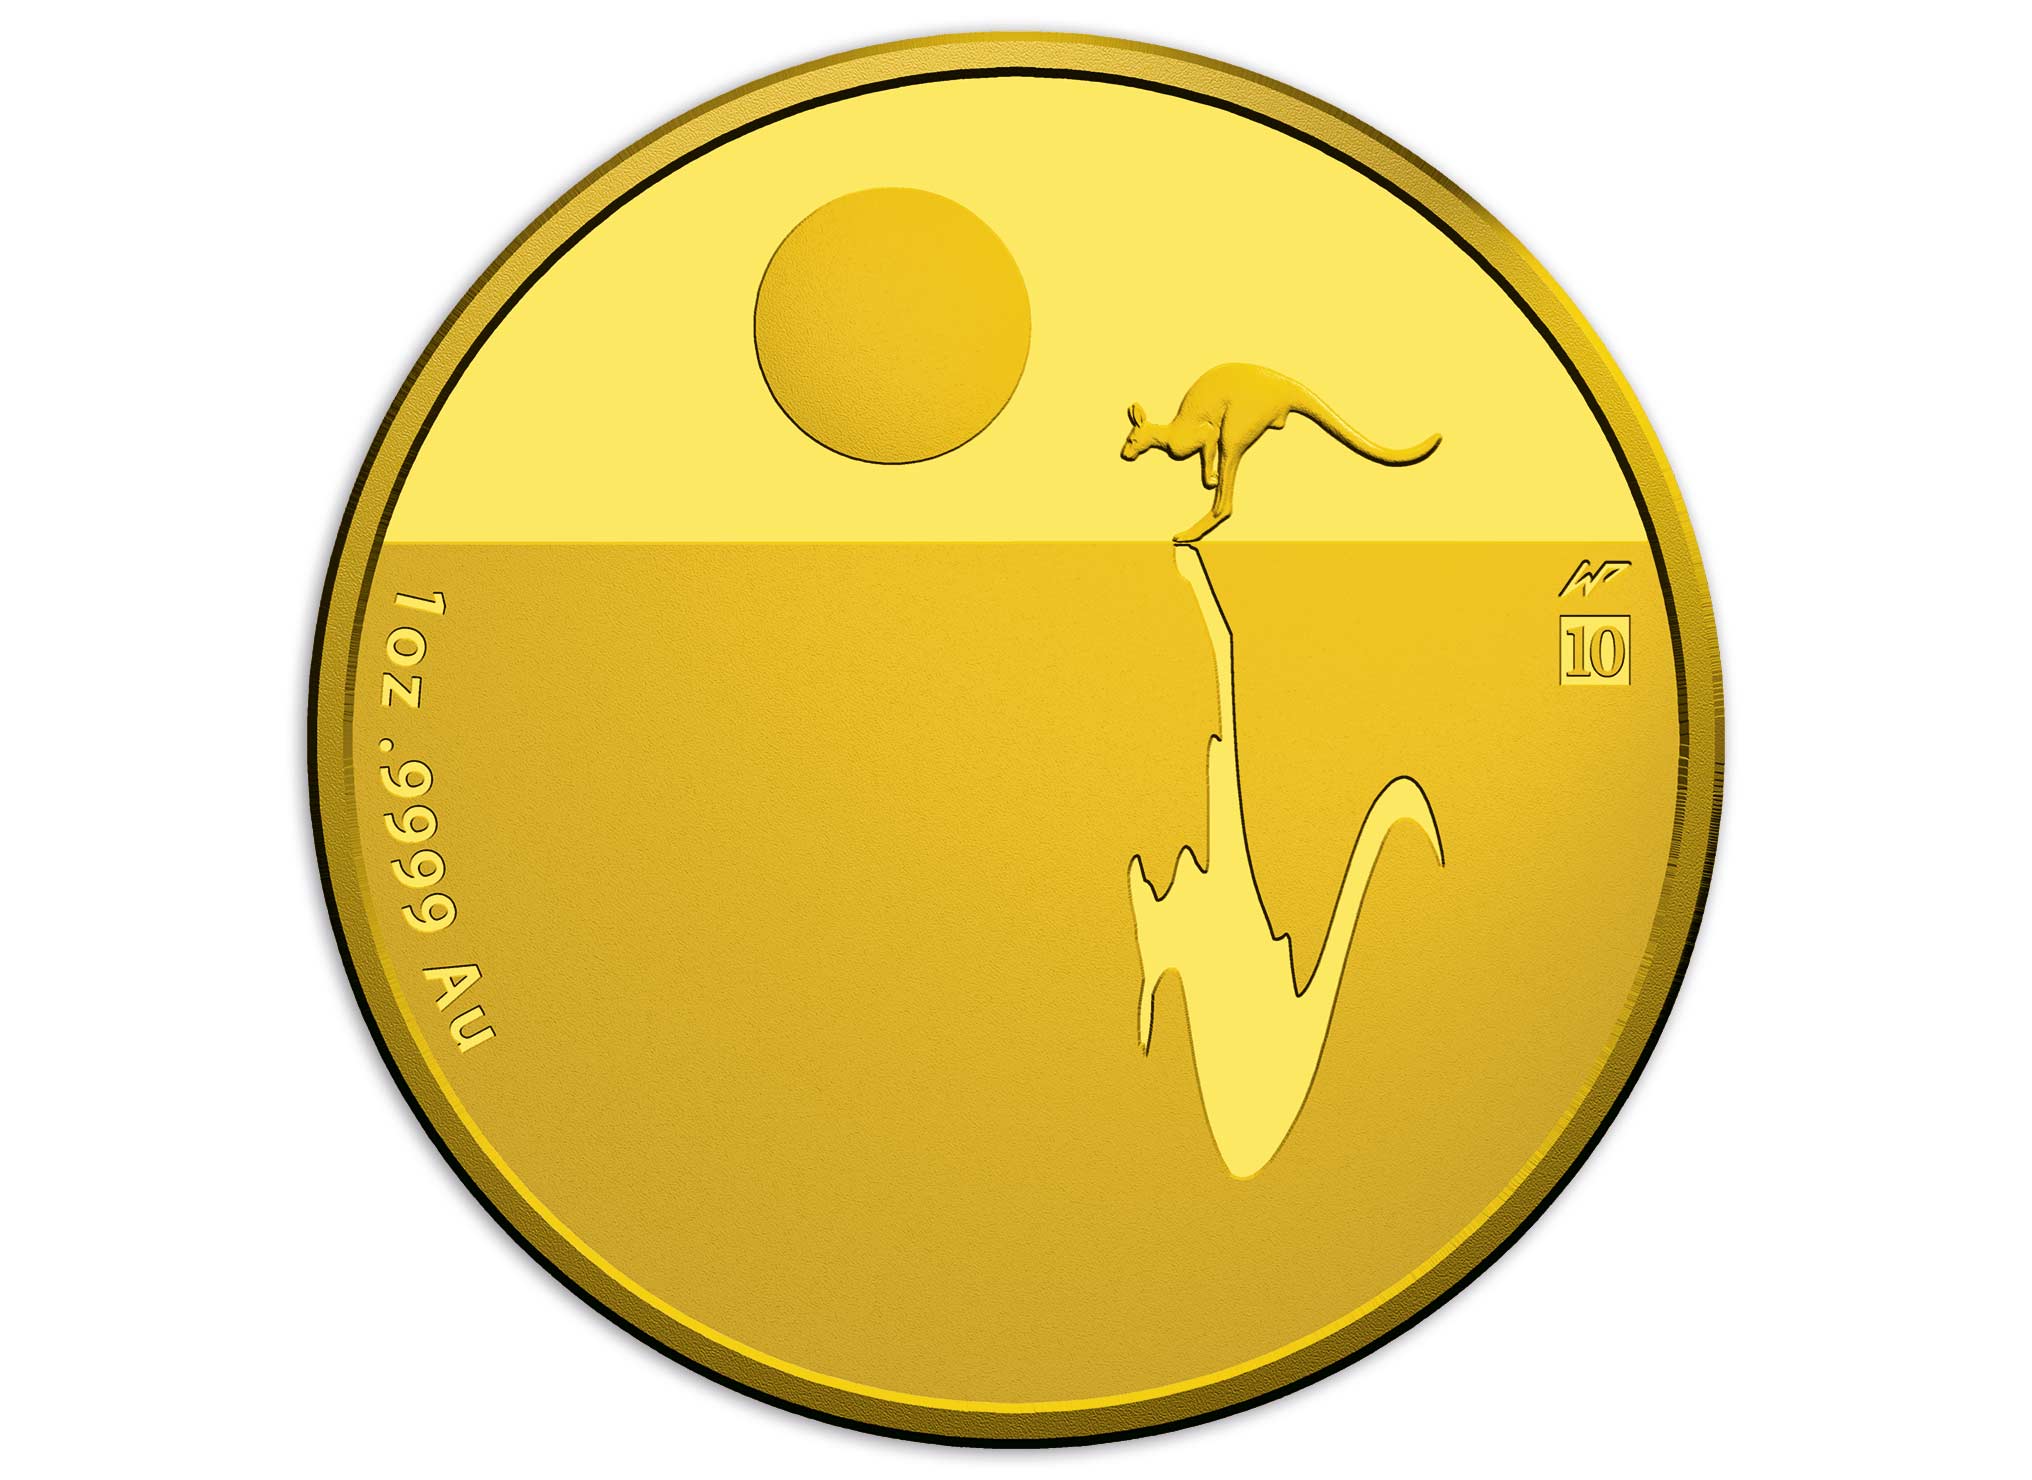 Känguru Goldmünze — Sunset Kangaroo 2017 1oz Gold — Begehrte Goldmünze